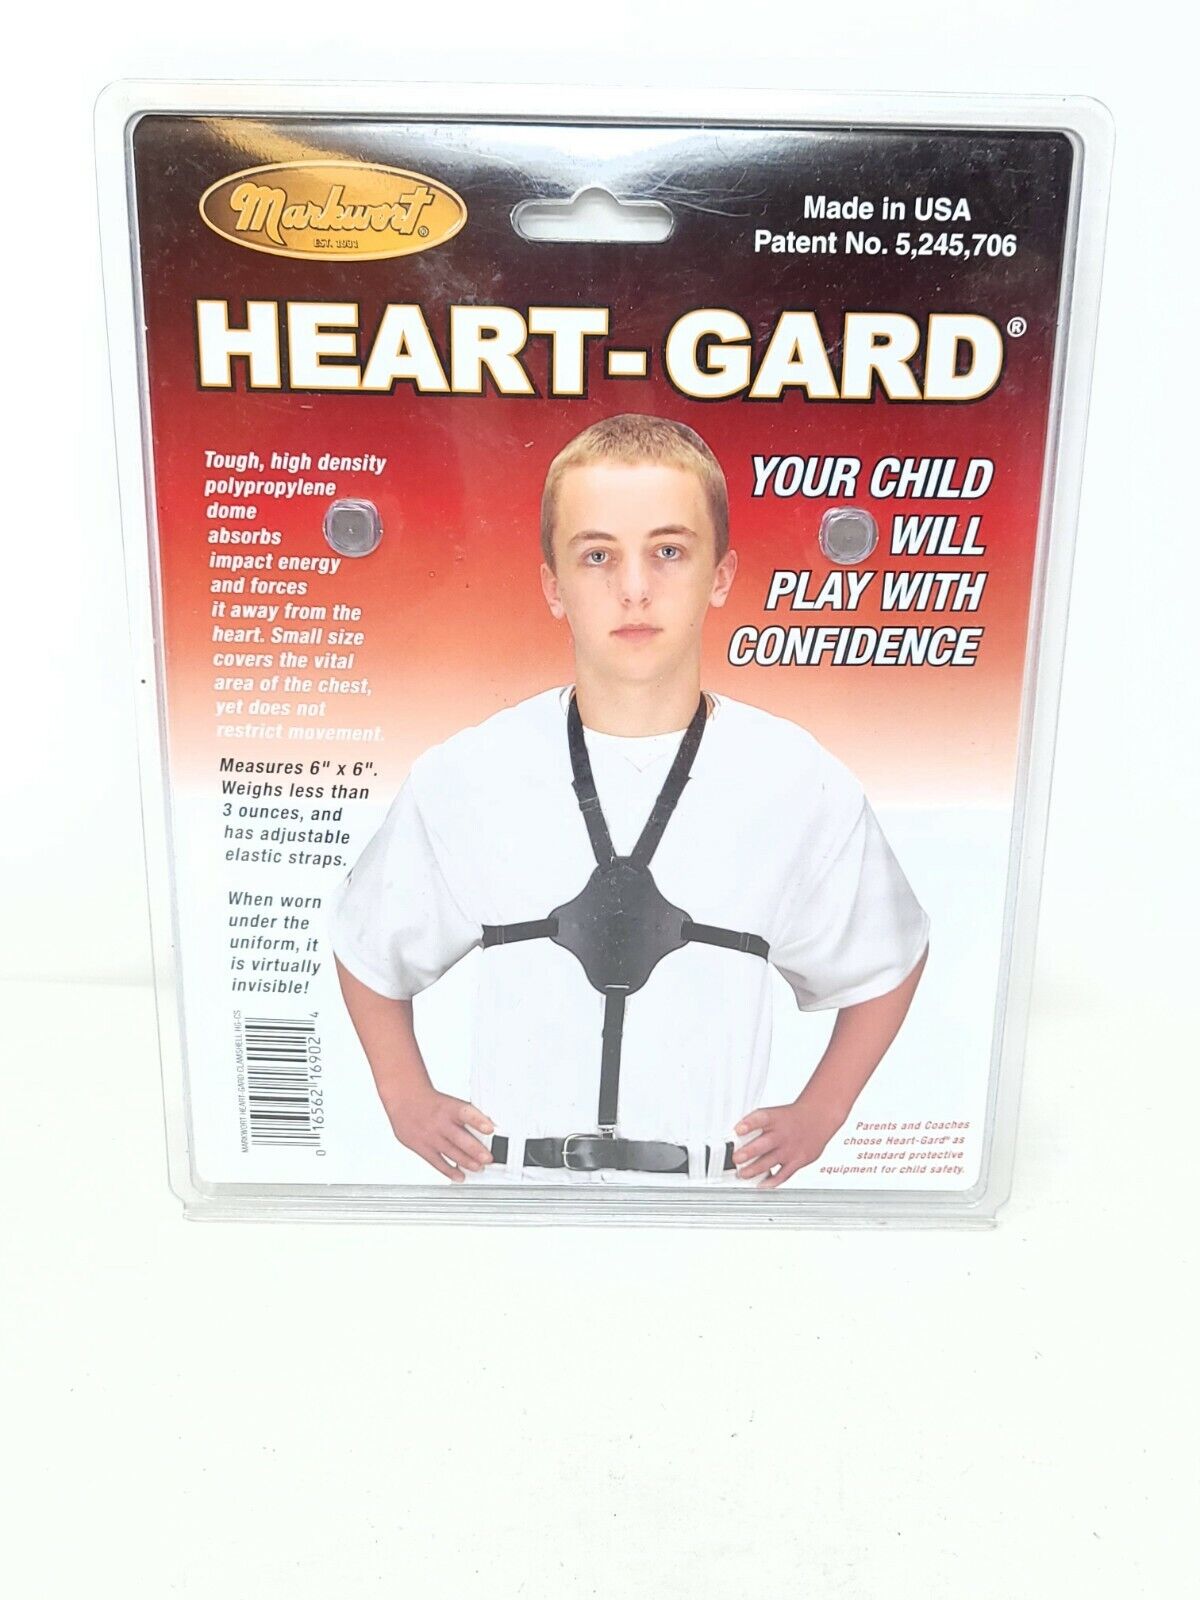 Baseball Softball Adjustable Heart Gard Protective Chest Gear Markwort HG-CS